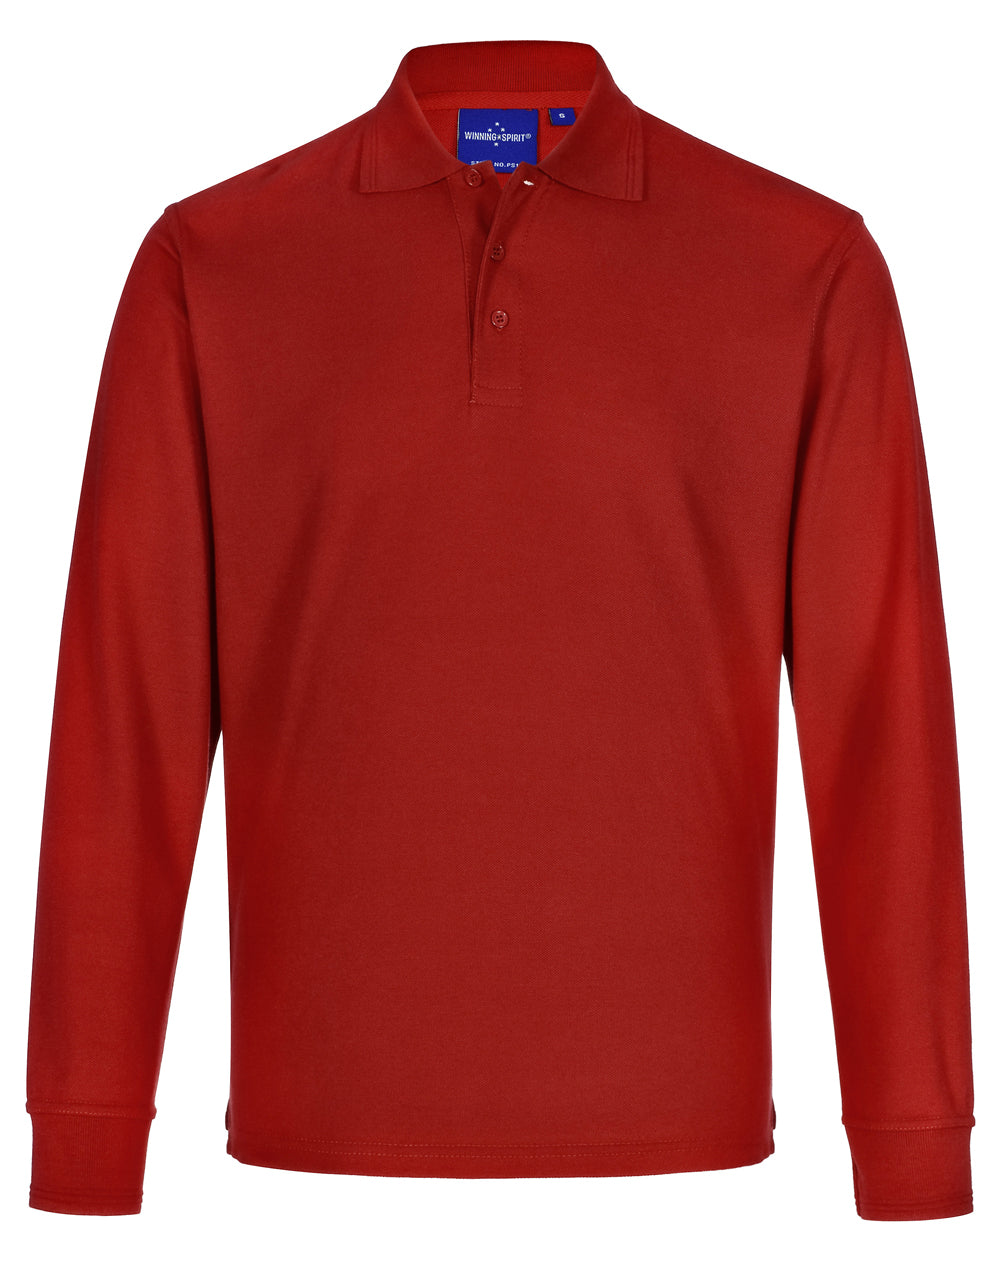 Winning Spirit Traditional Poly/Cotton Unisex Polo Shirt PS12 Casual Wear Winning Spirit Red XS 